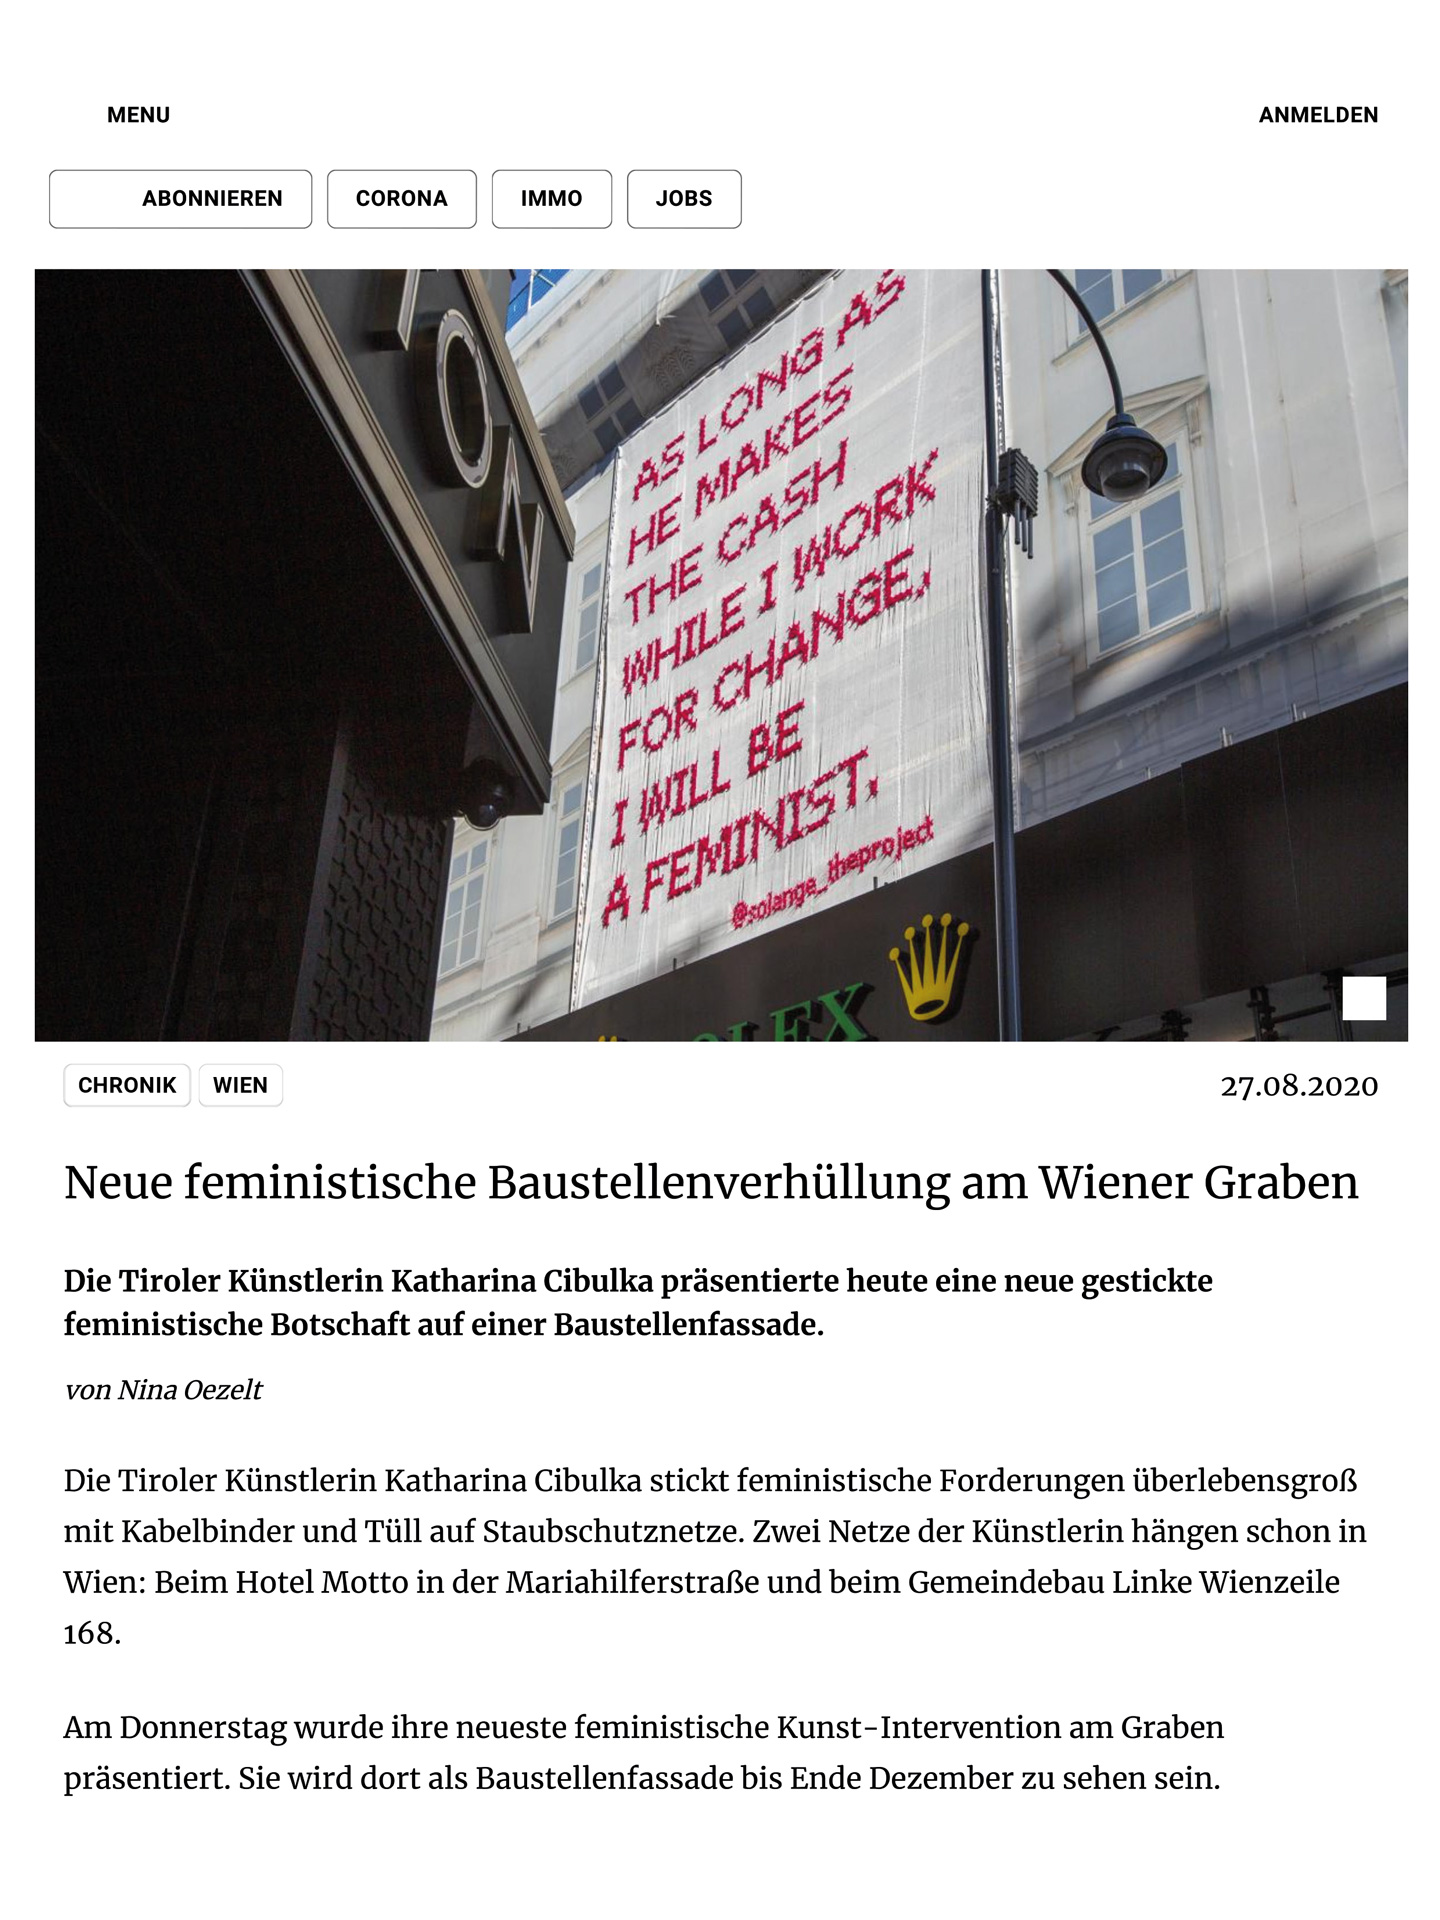 Kurier – Neue feministische Baustellenverhüllung am Wiener Graben – 27/08/20